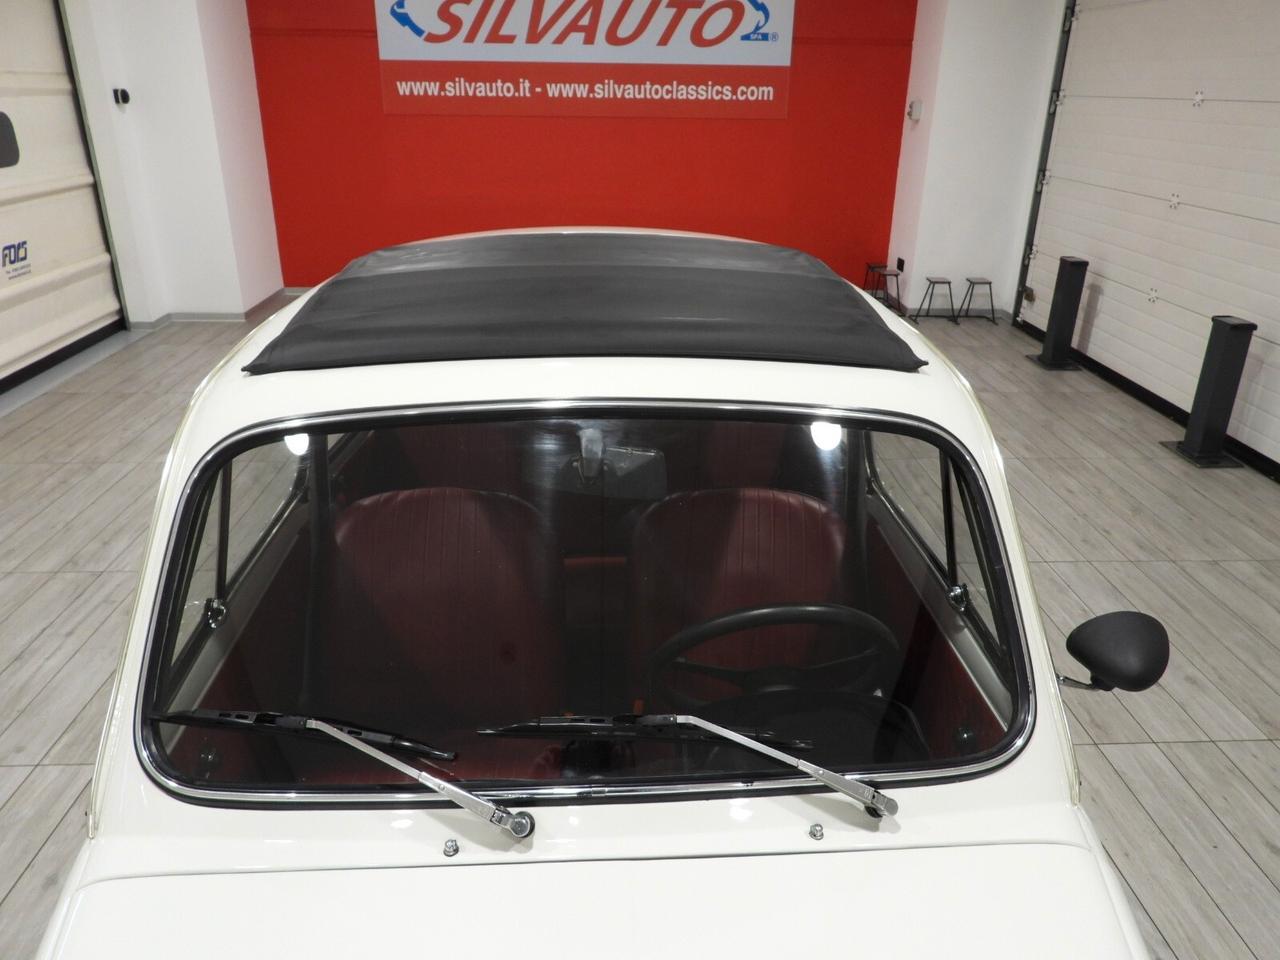 FIAT 500 L ”ABARTHIZZATA” (1969)